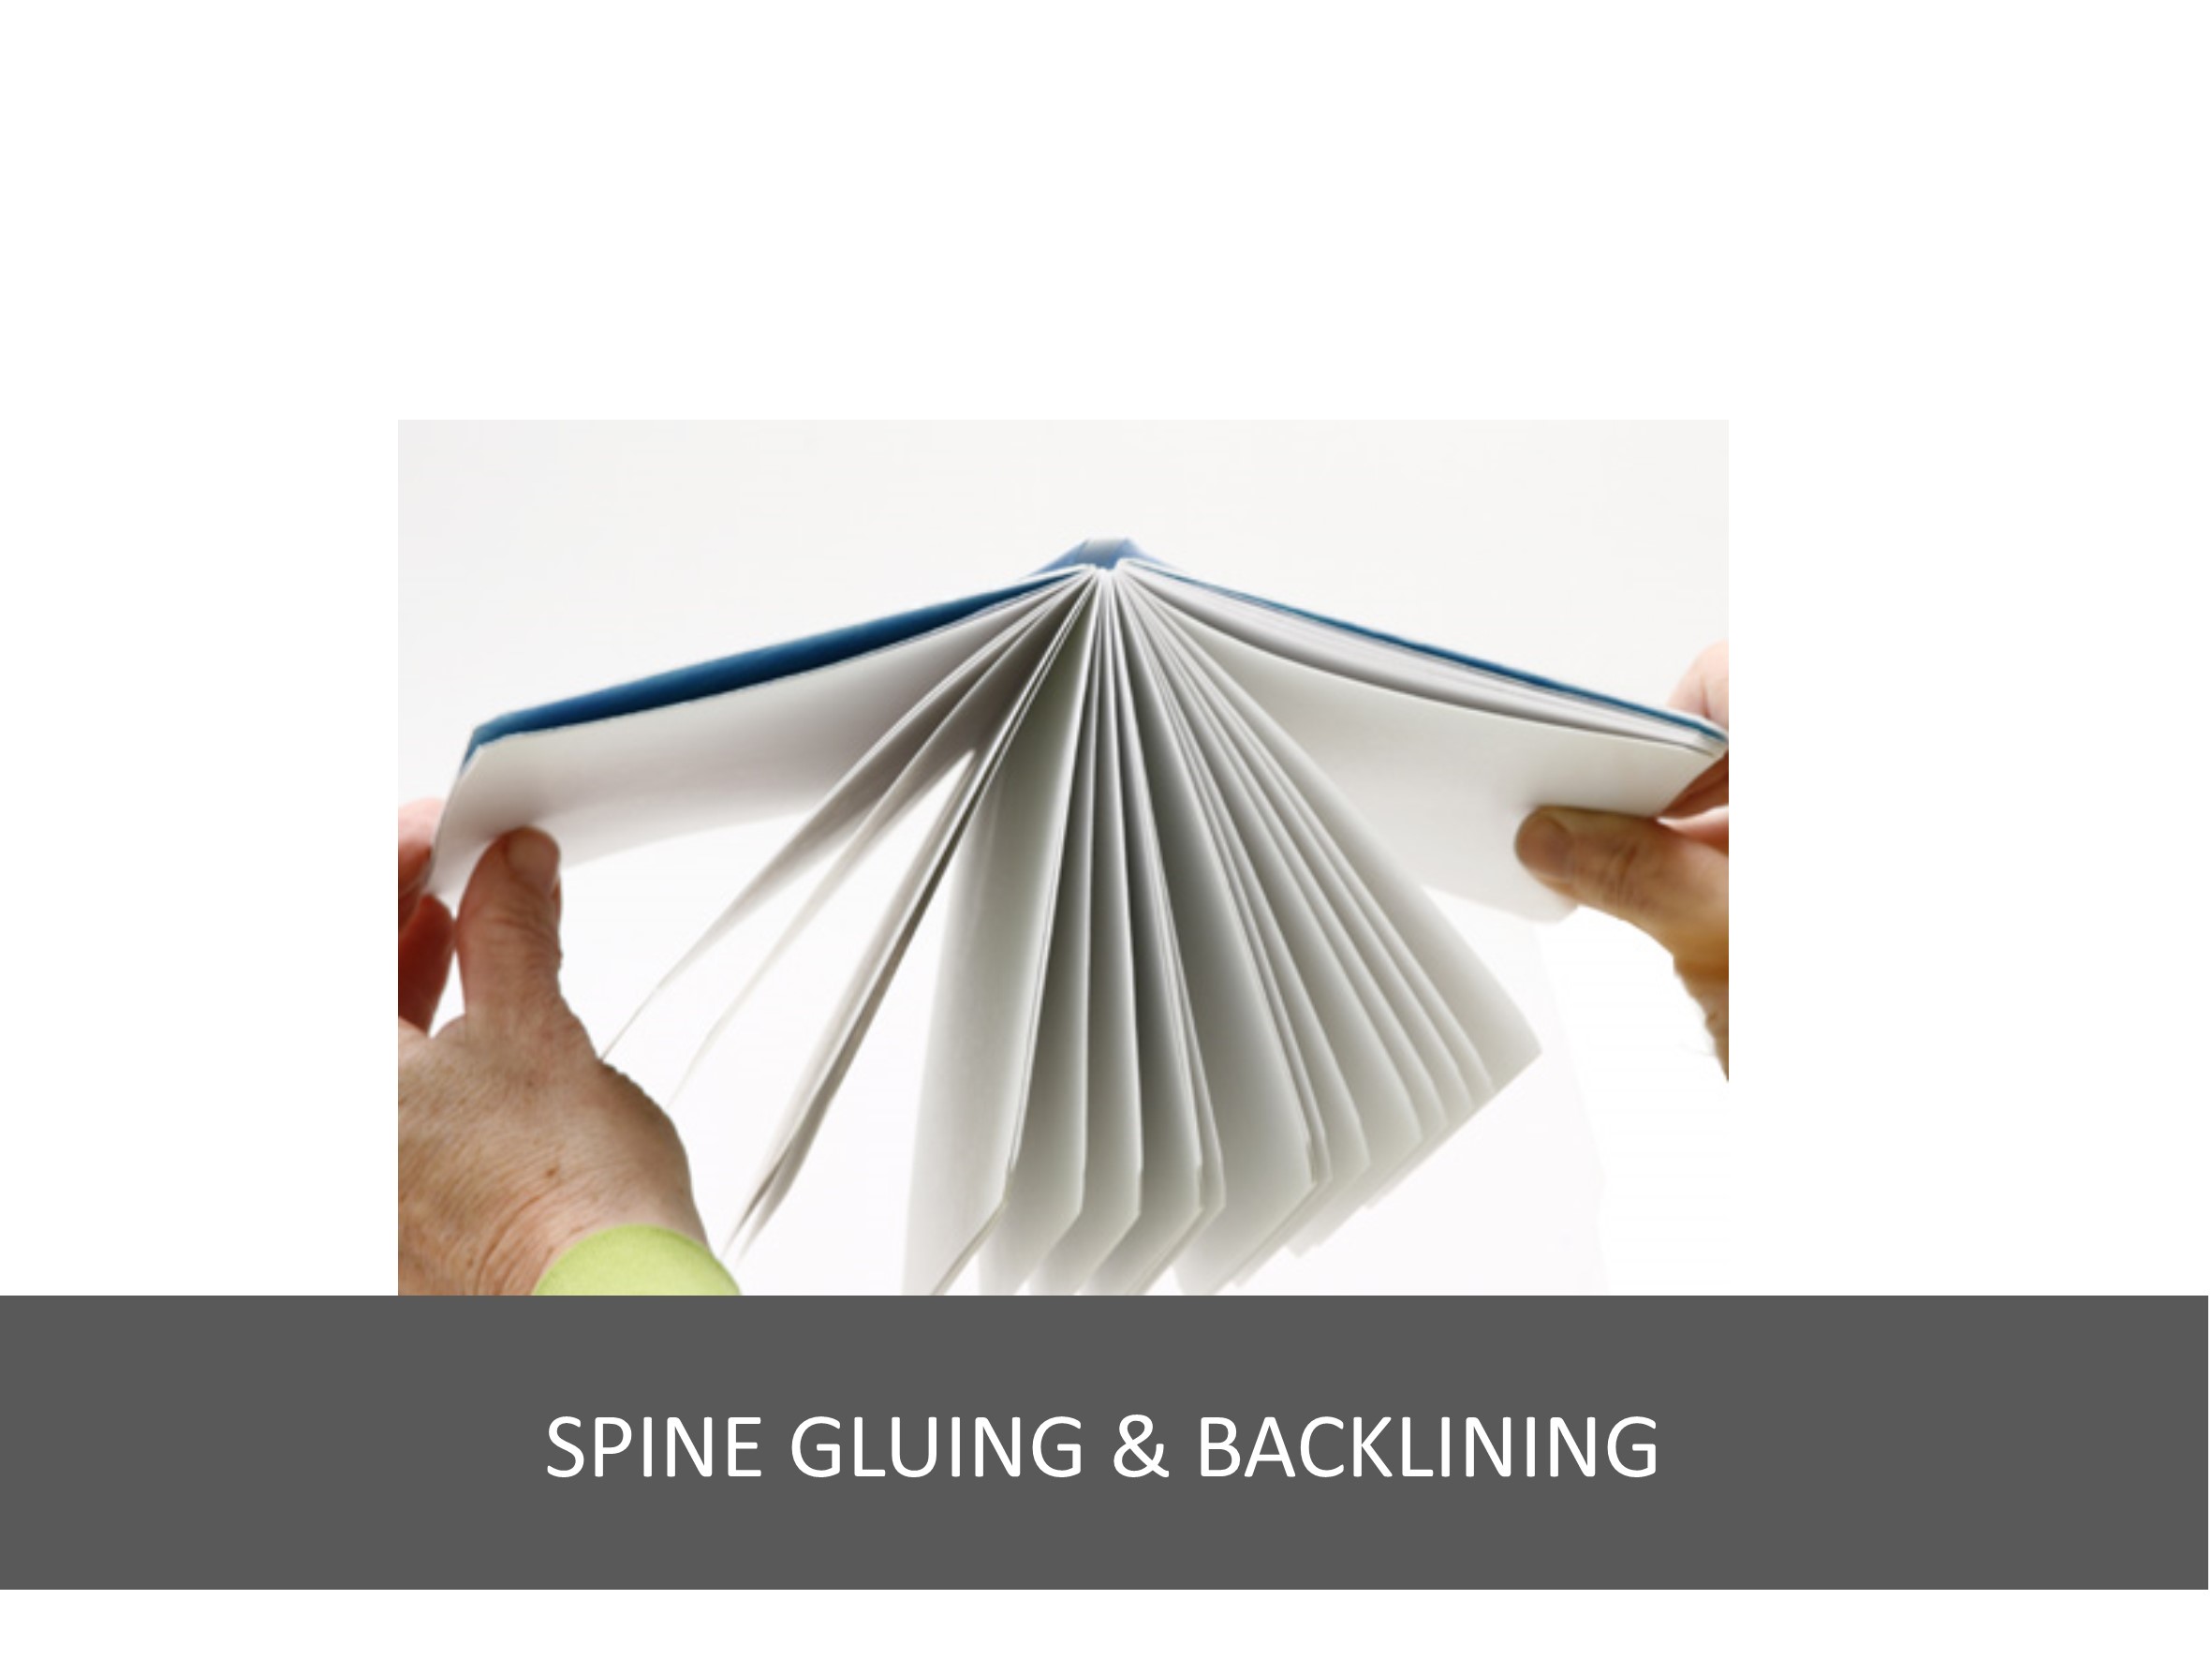 Spine gluing & backlining